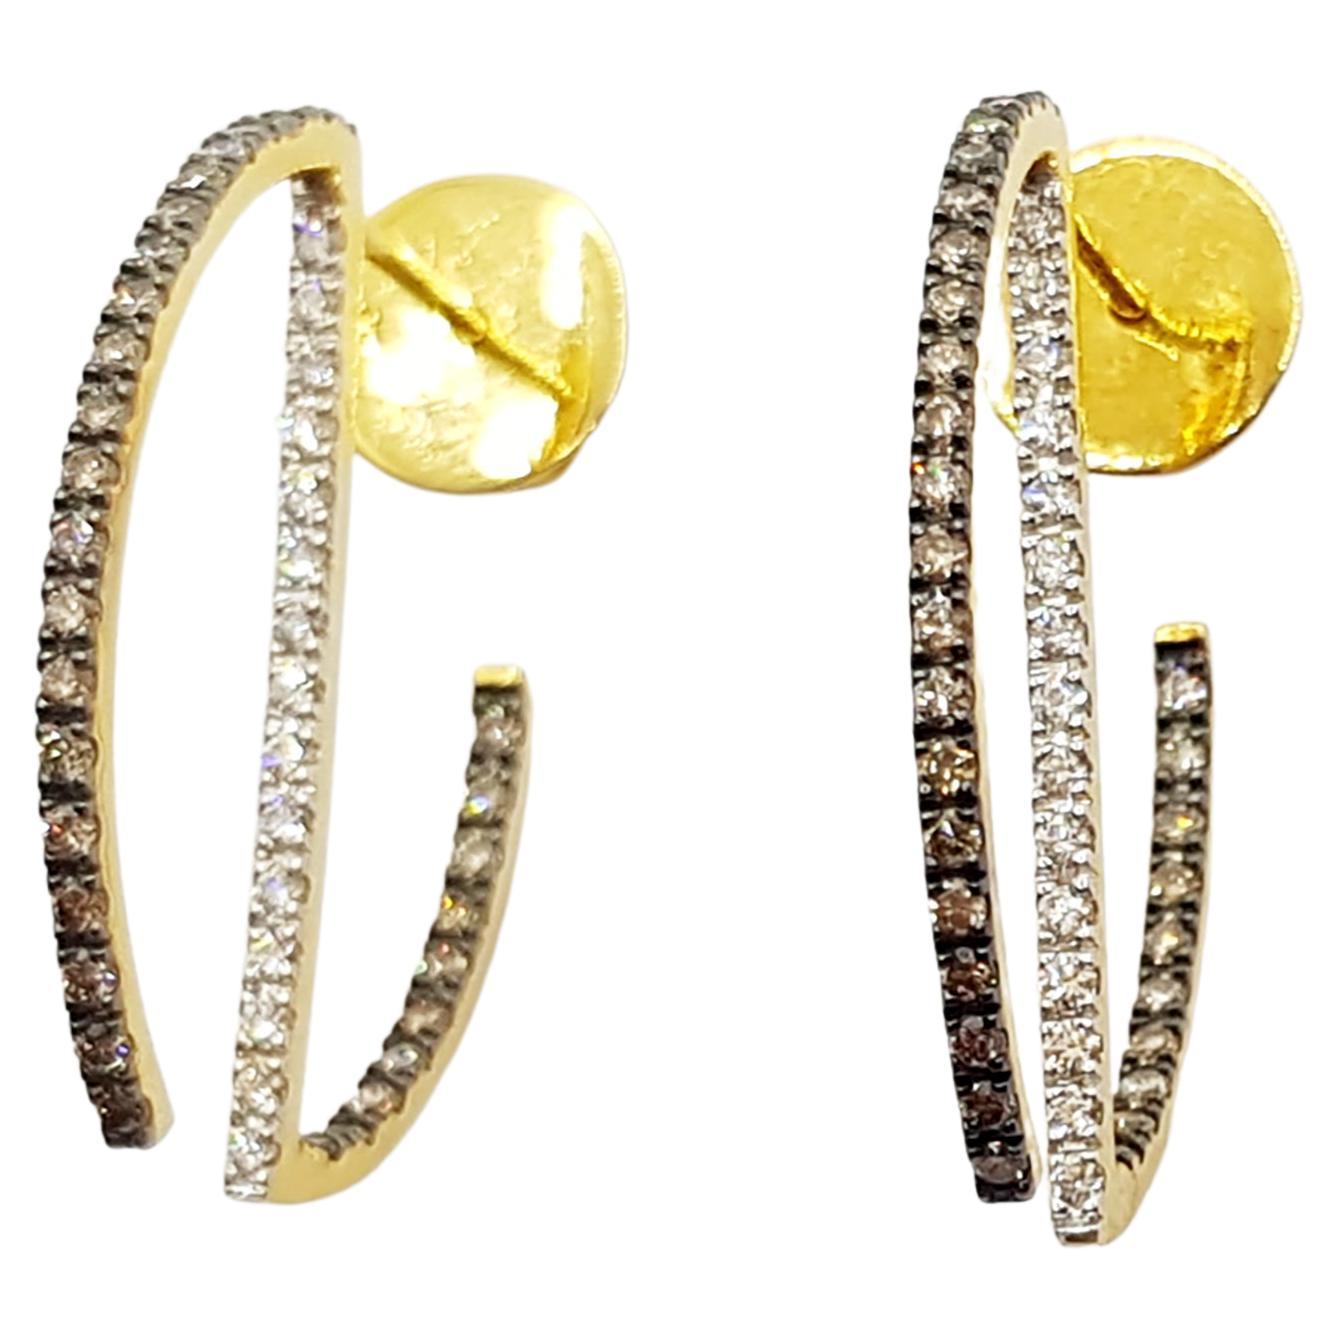 Brown Diamond 0.78 carat with Diamond 0.35 carat GeoArt Earrings set in 18 Karat Gold Settings by Kavant & Sharart


Width:  0.2 cm 
Length:  3.0 cm
Total Weight: 7.2 grams

